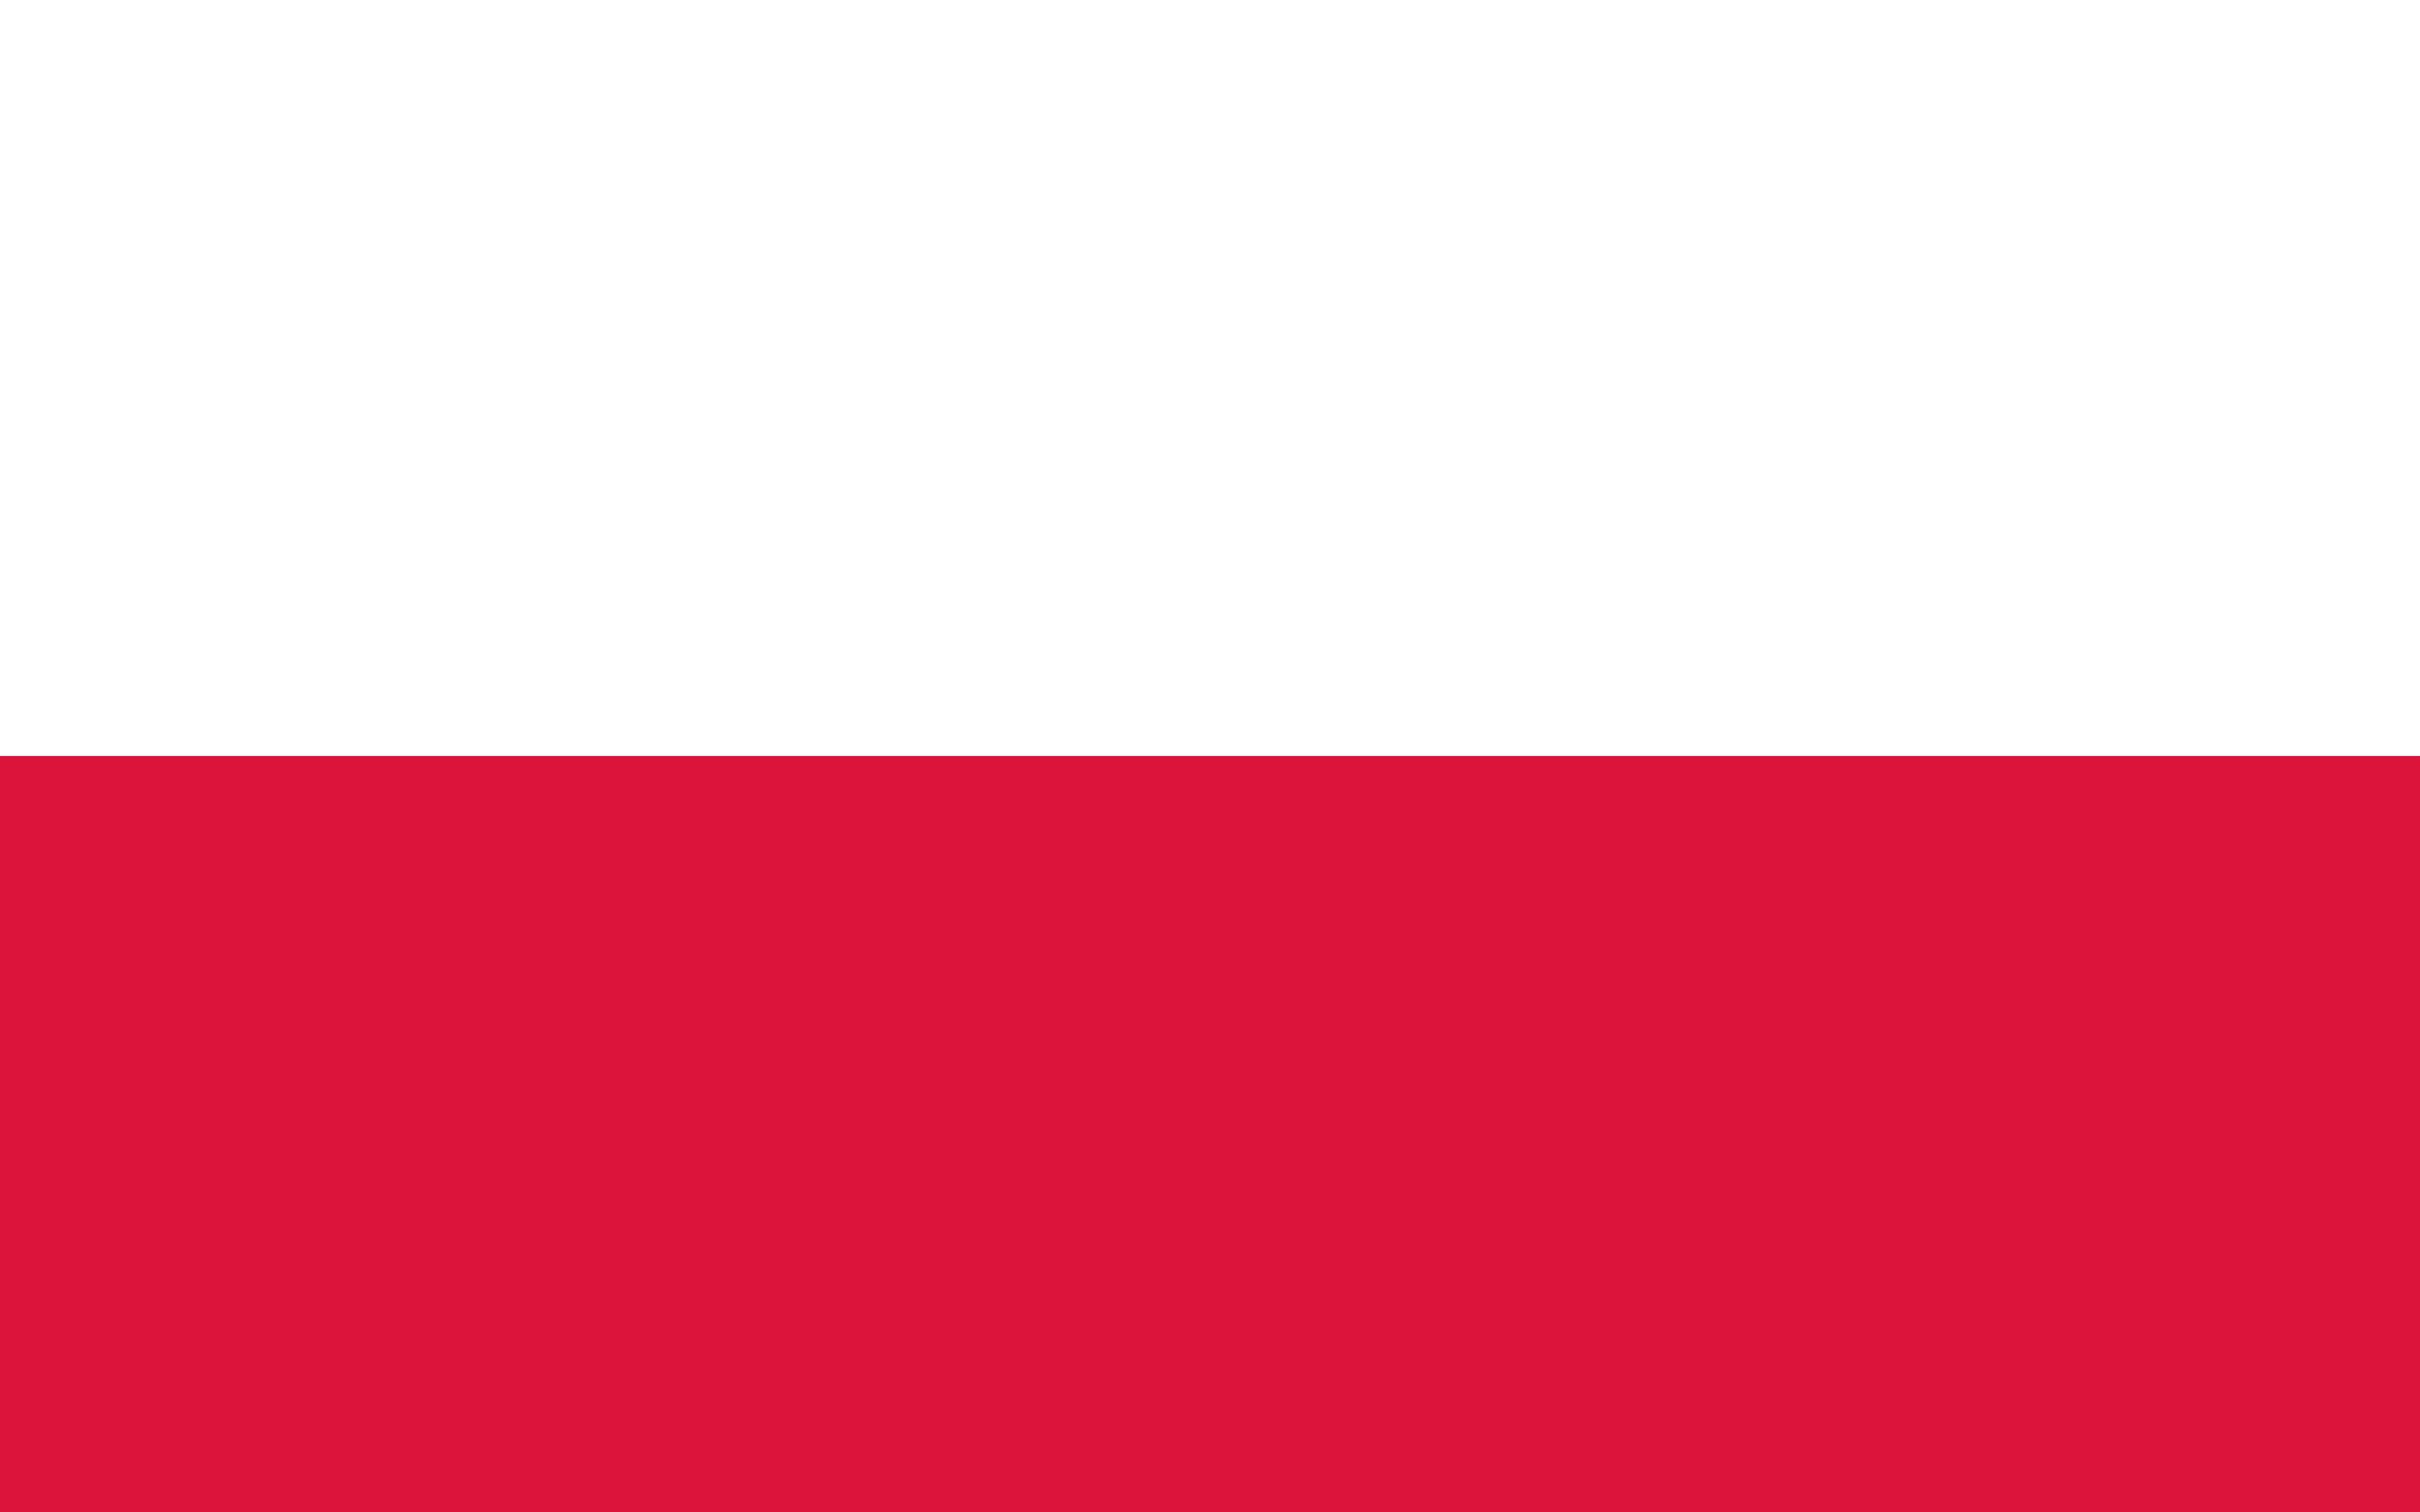 Poland Flag Image - Free Download